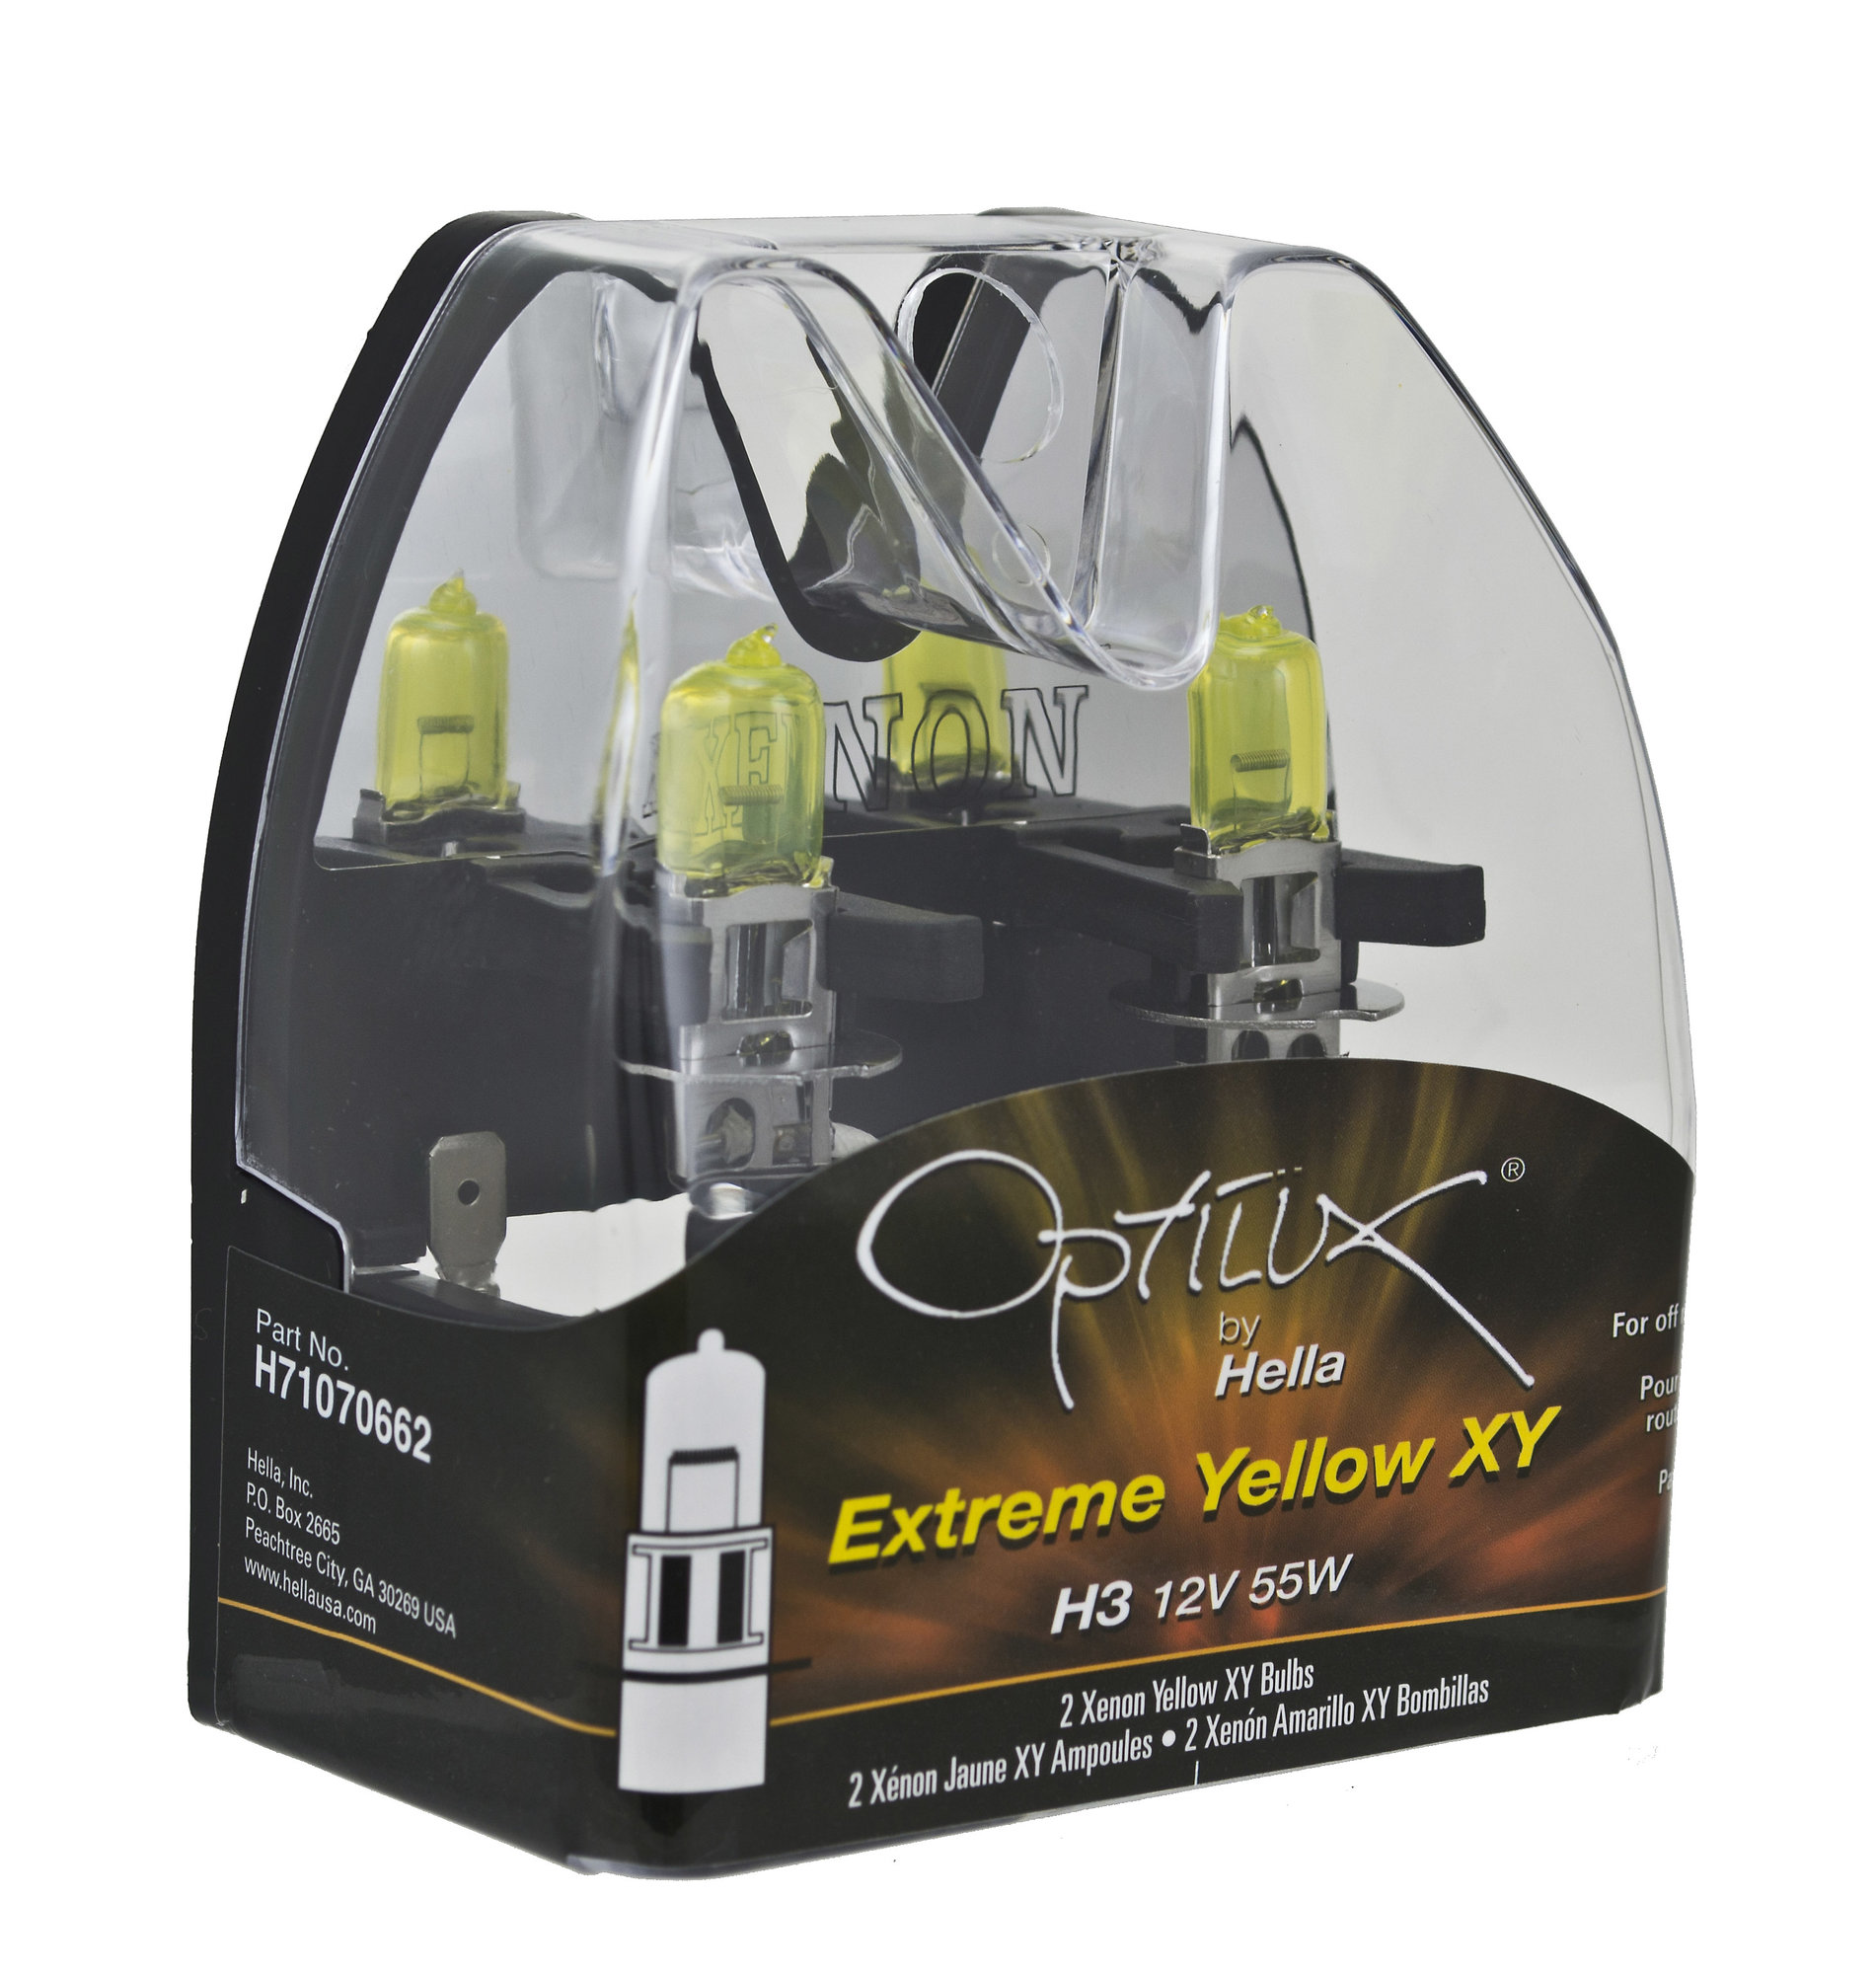 Hella Optilux 9007 12V 65/55w Xenon Yellow Halogen Bulb Pack of 2 